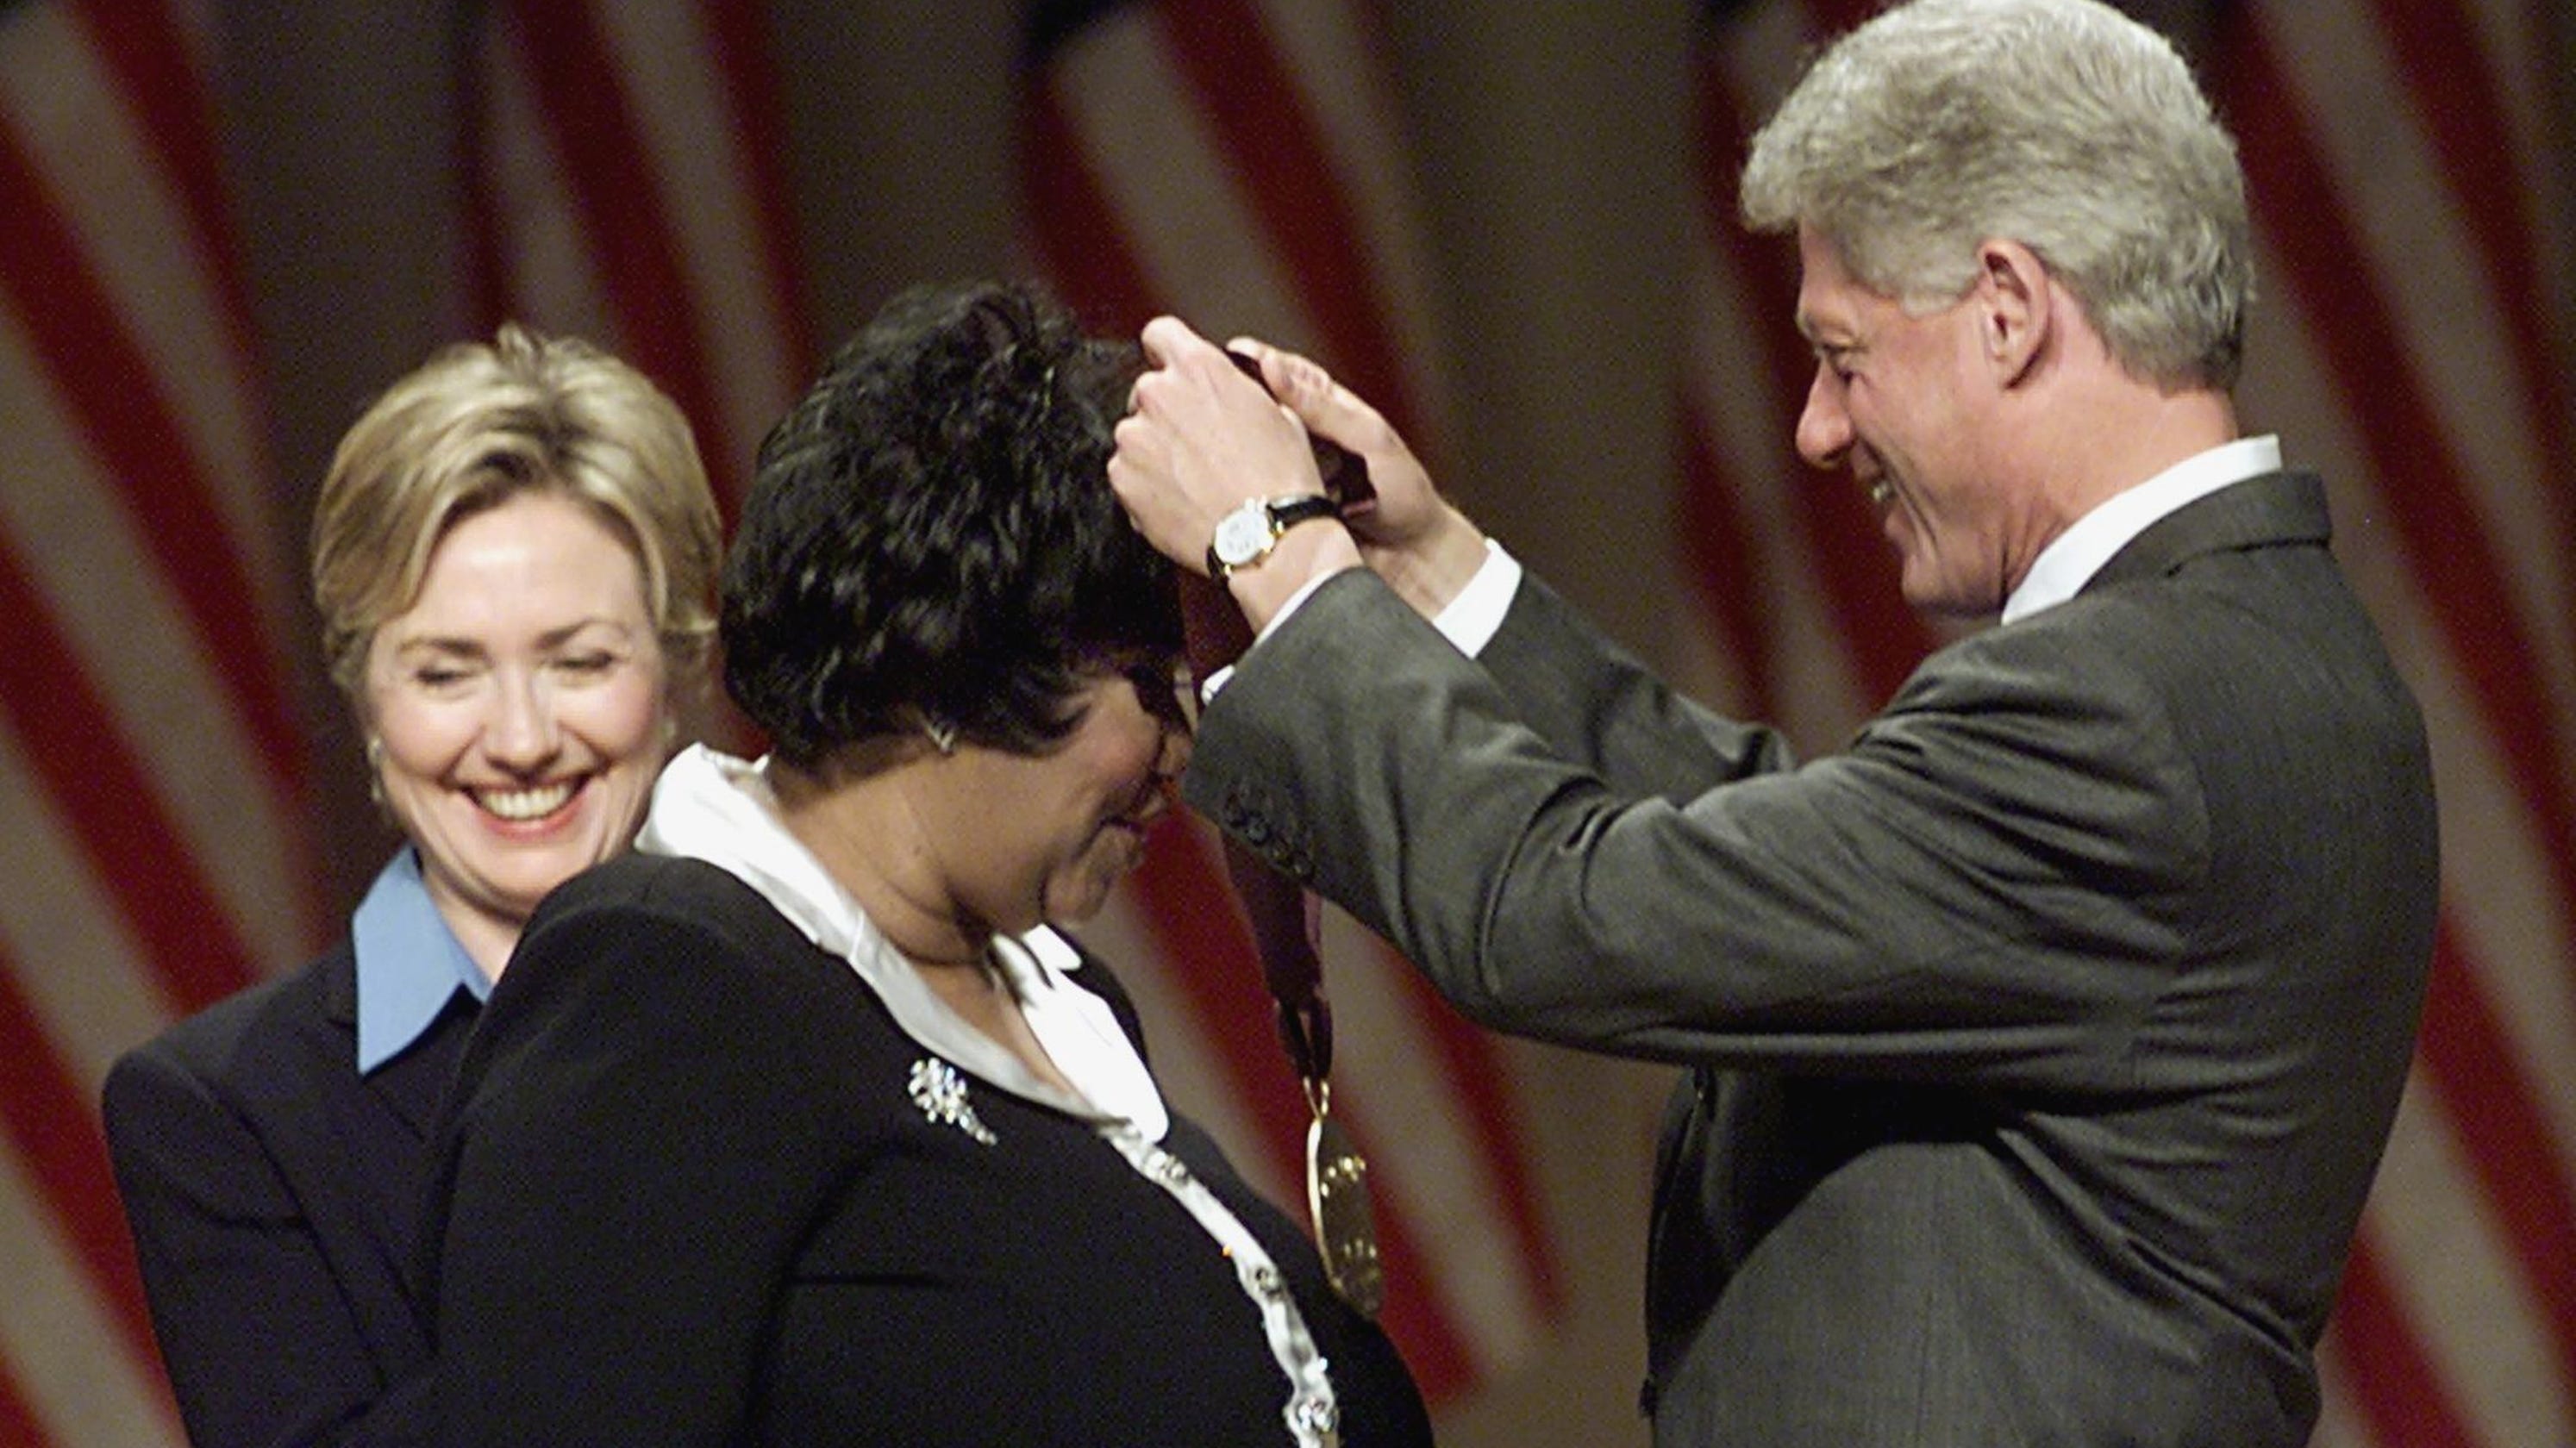 Bill Clinton, Smokey Robinson to speak at Aretha Franklin funeral